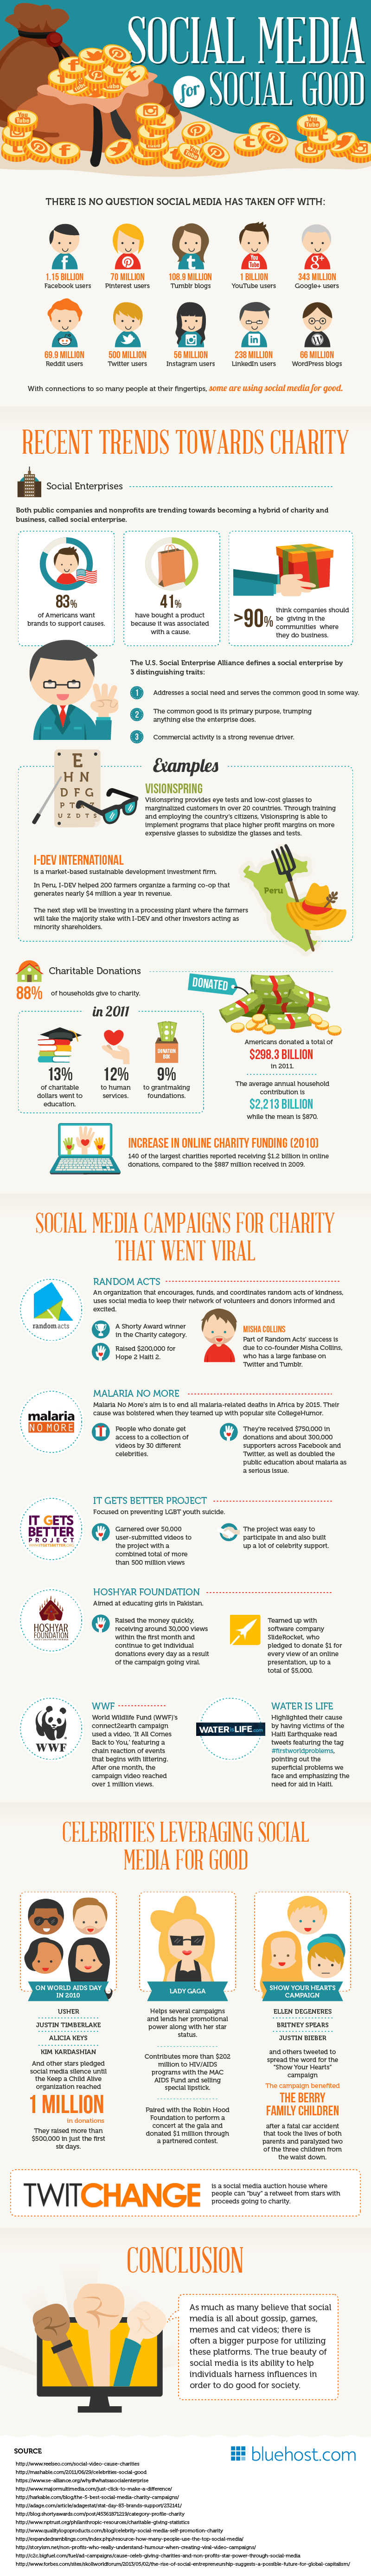 Social Media For Good (Infographic)